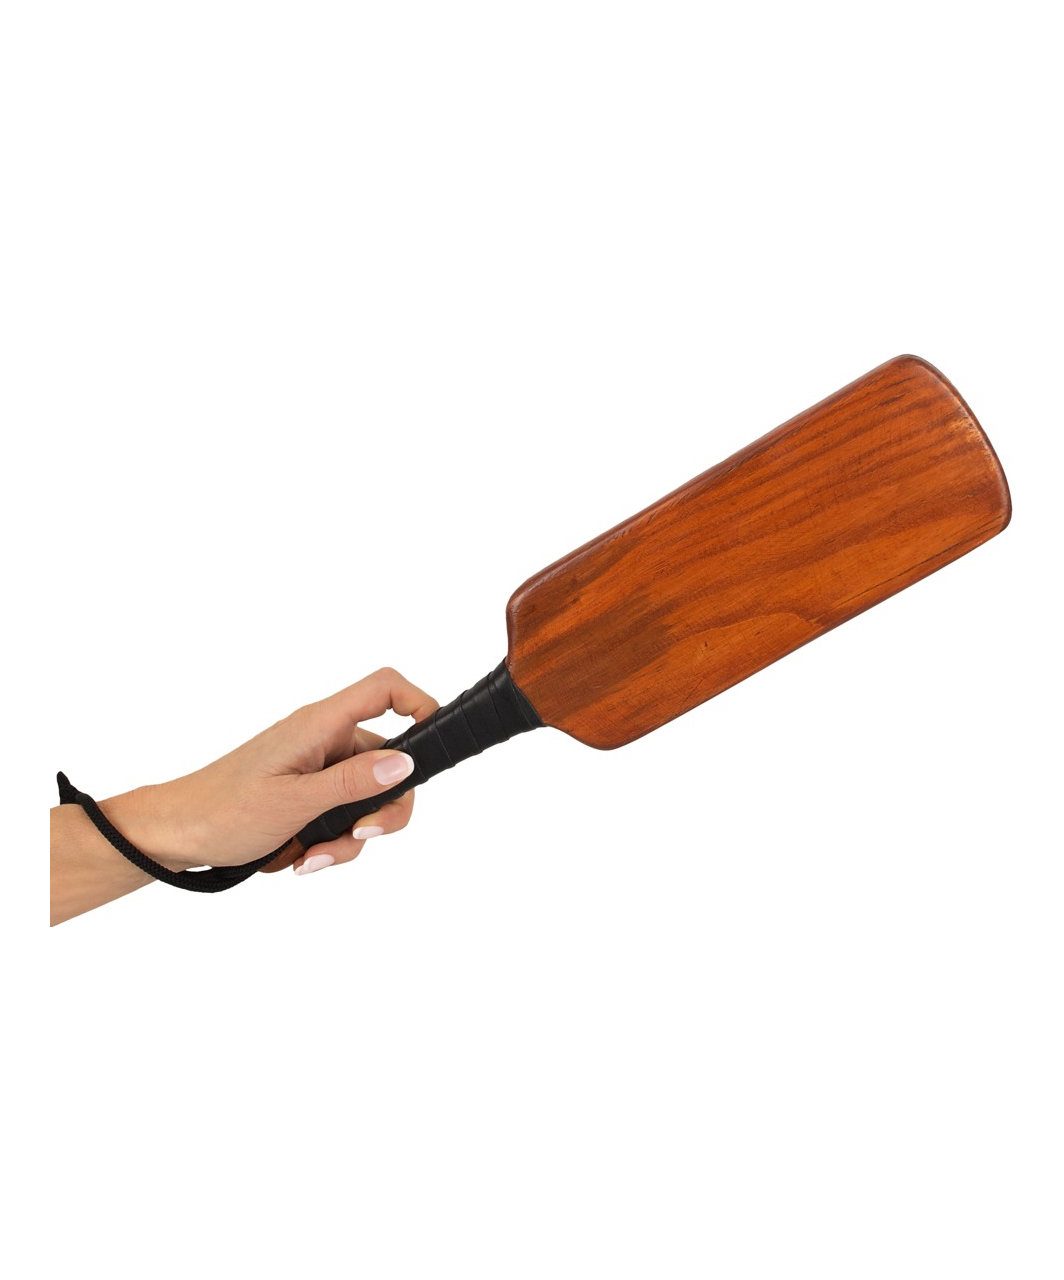 Zado brown wooden spanking paddle